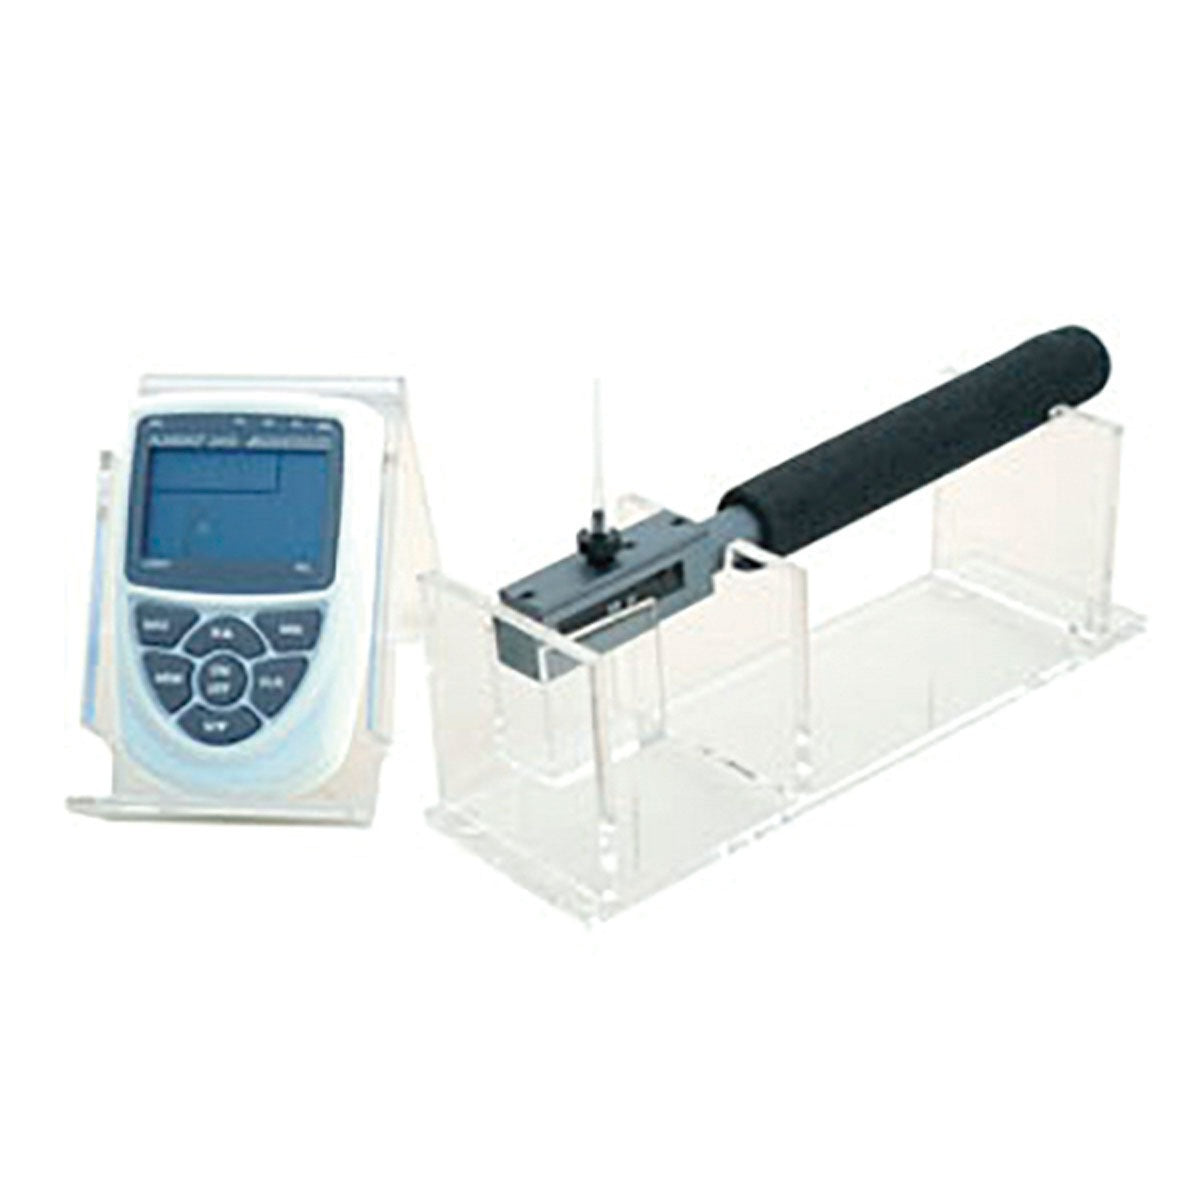 Electronic von Frey Anesthesiometer, Rigid tips, 800g range